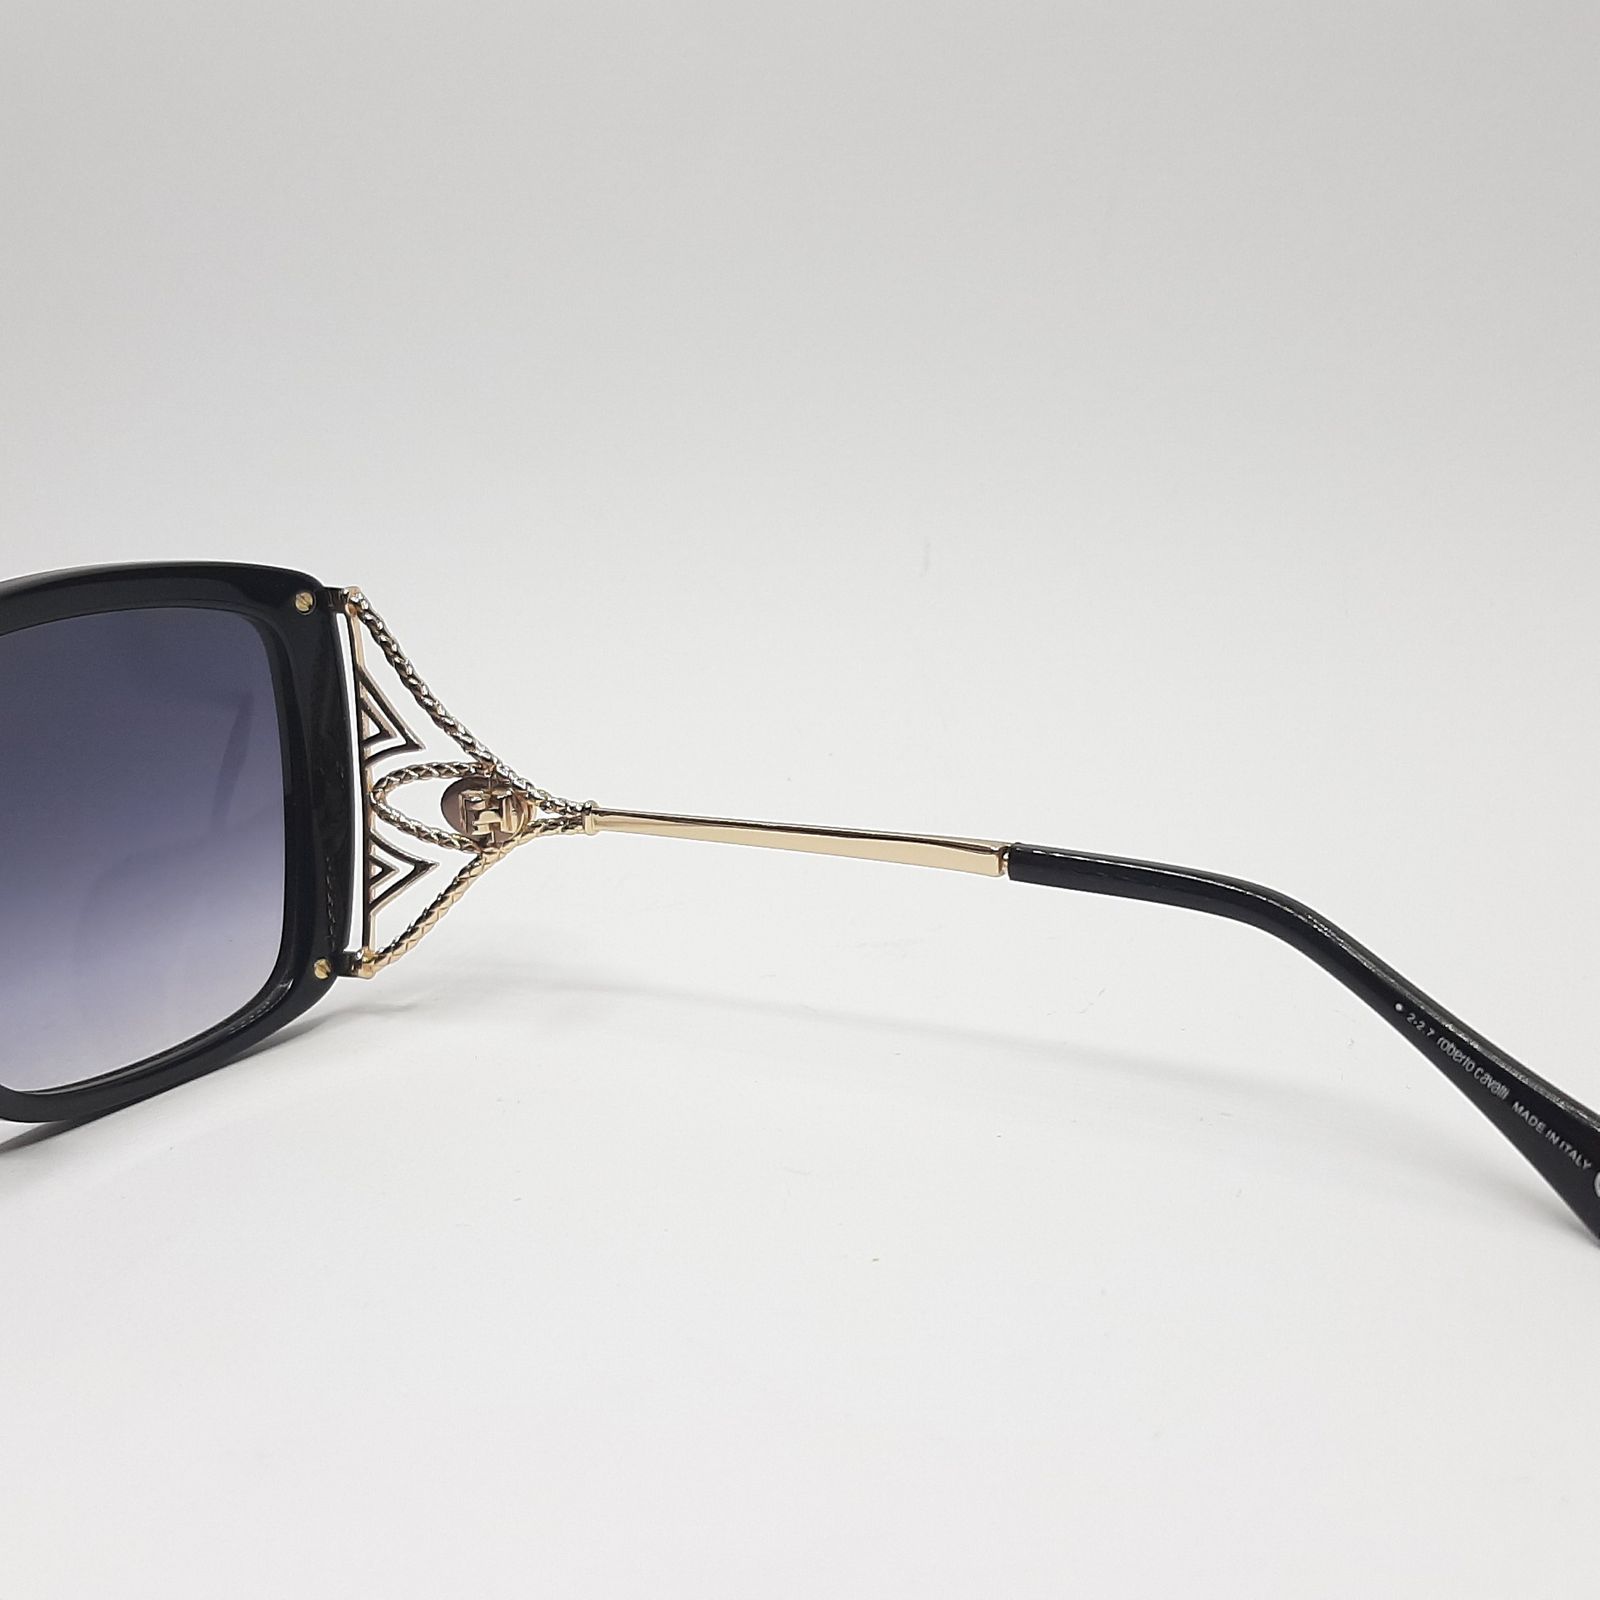 عینک آفتابی زنانه روبرتو کاوالی مدل RC105816c -  - 6